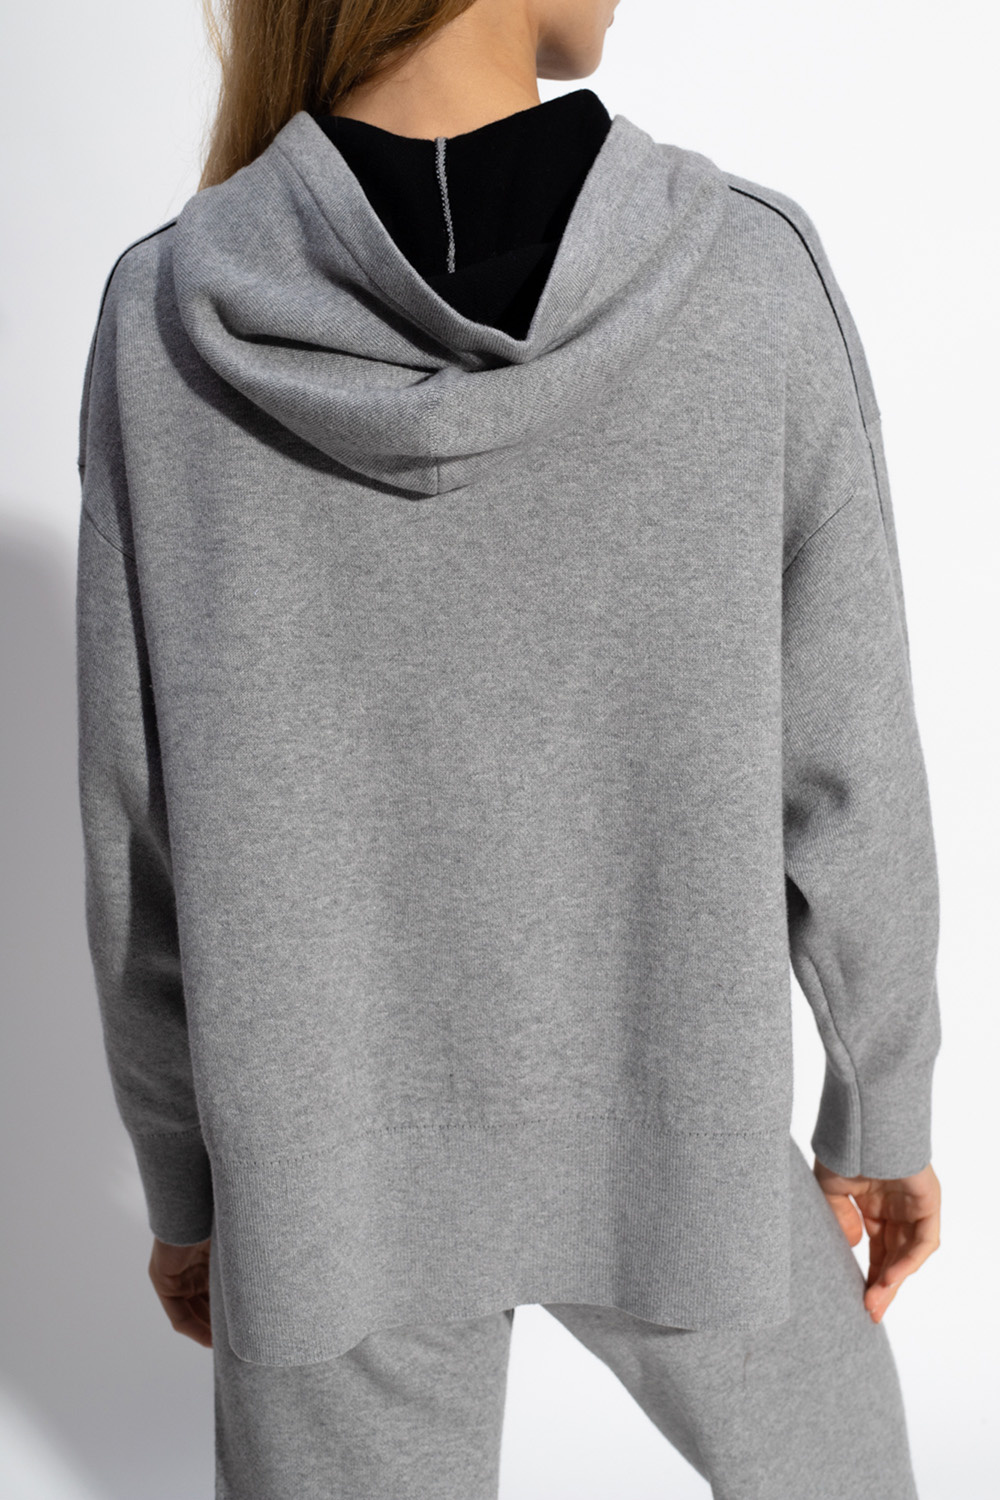 Proenza Schouler White Label Lederhose mit geradem Bein Nude Hooded sweater